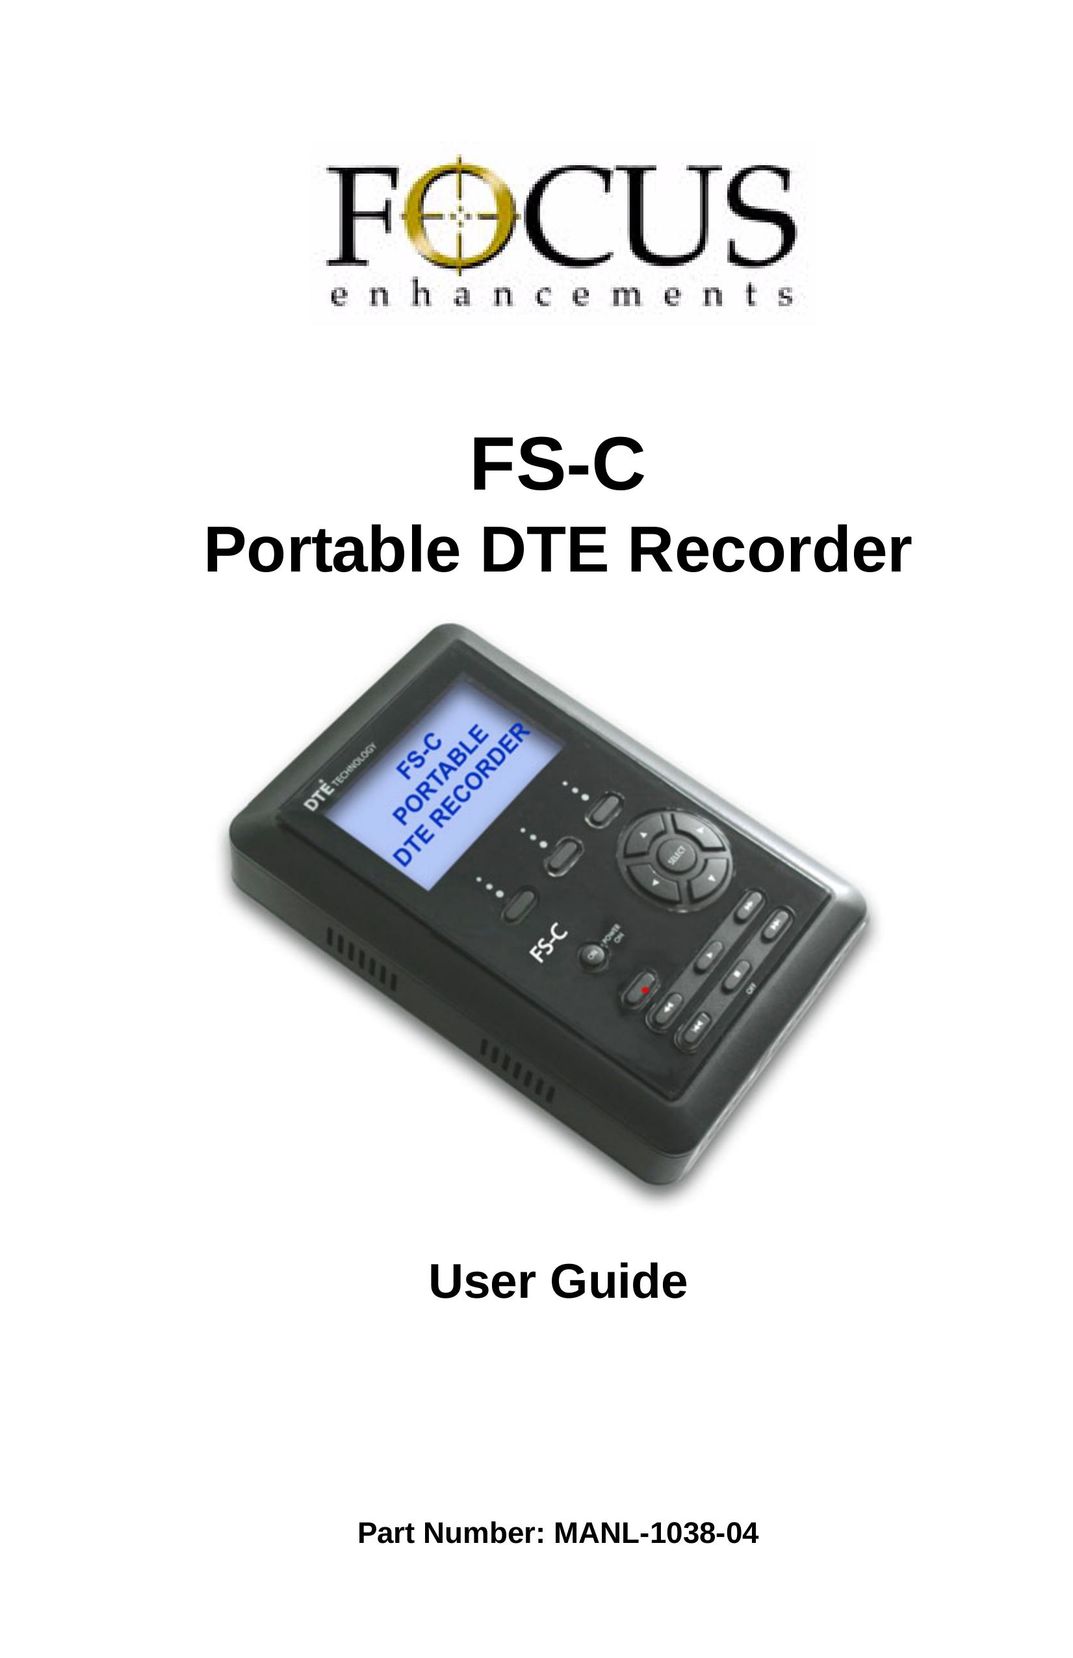 FOCUS Enhancements FS-C MP3 Player User Manual